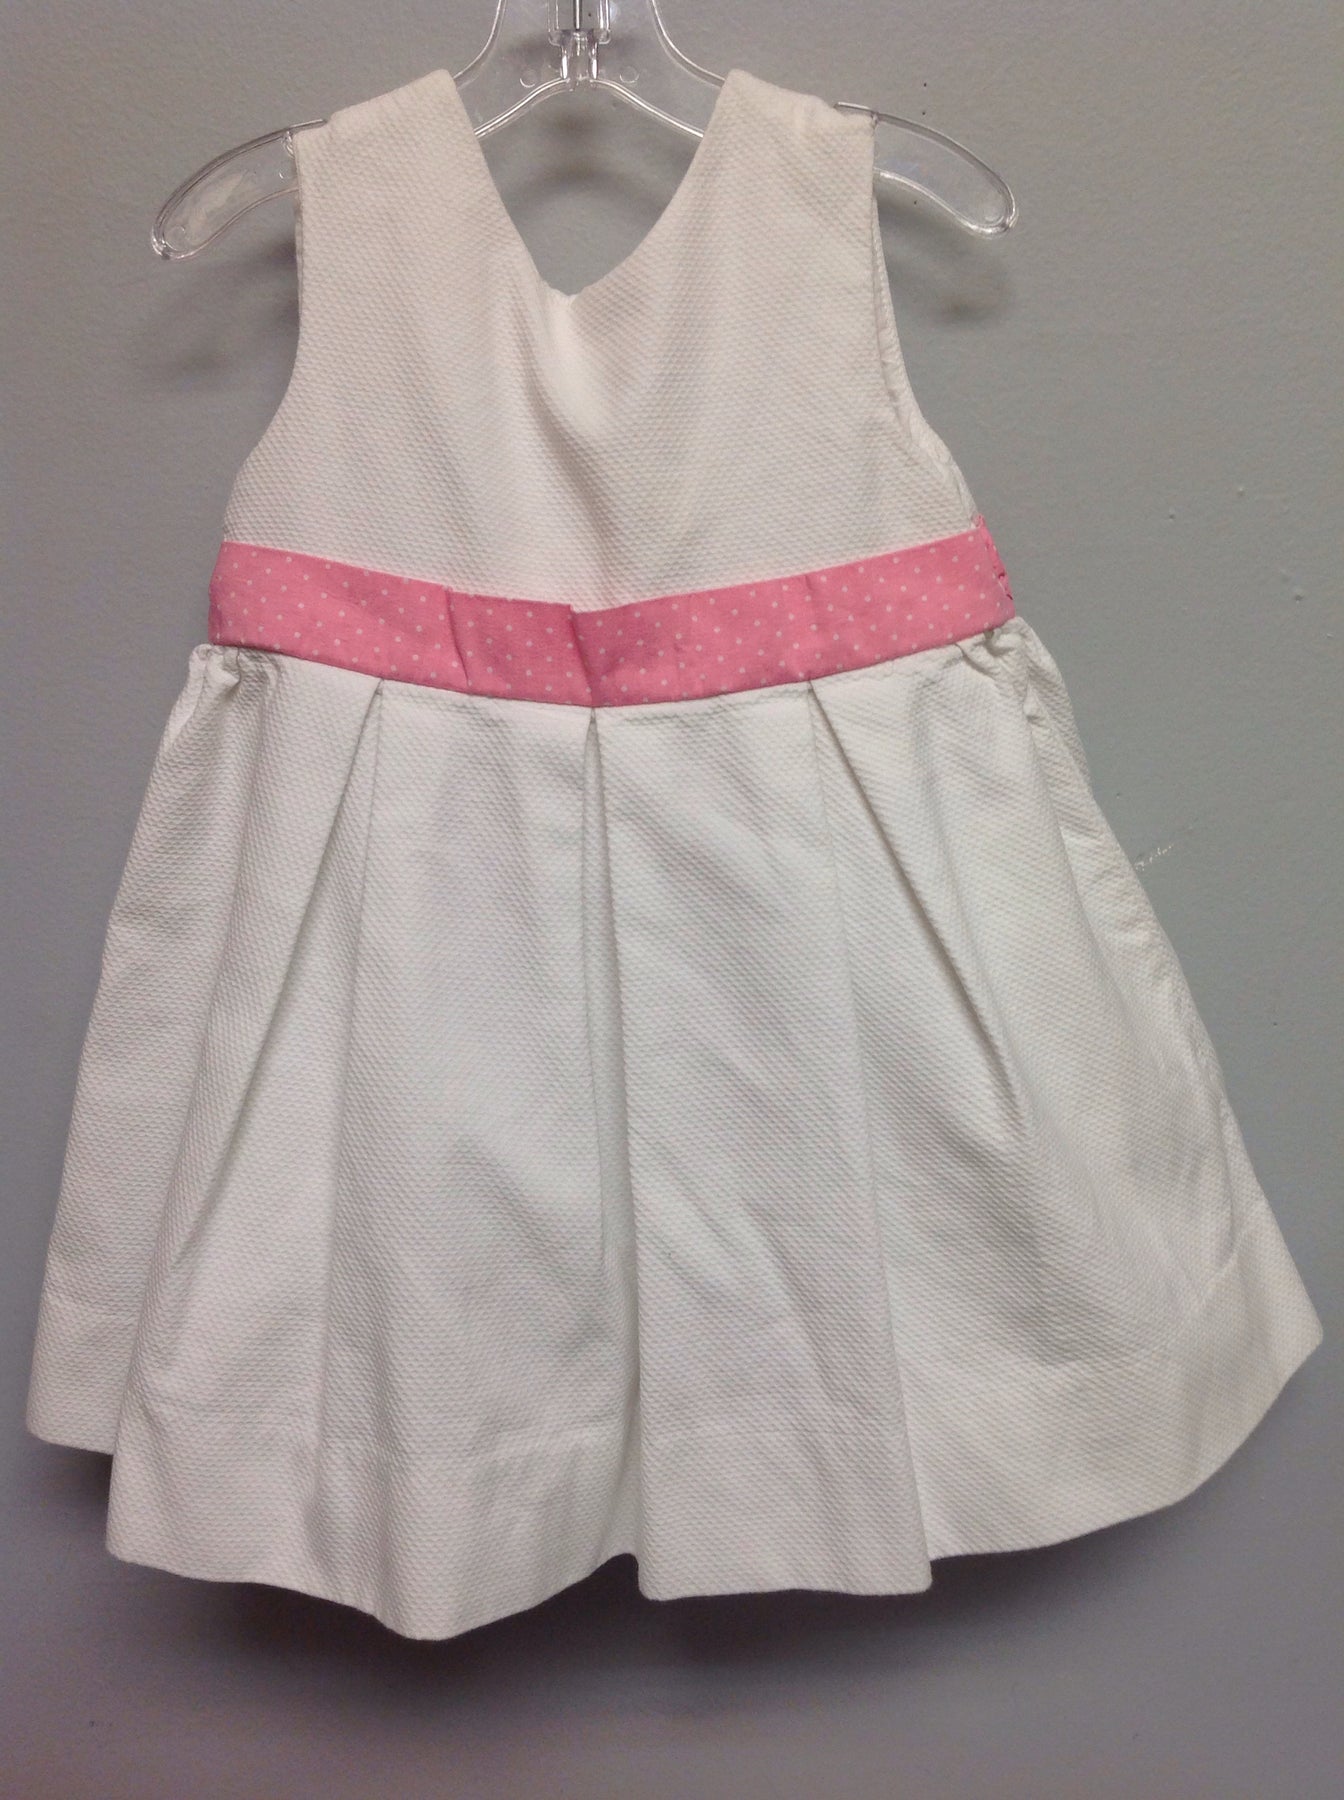 Pottery Barn Size 12M White & Pink Cotton Infant Girls Dress